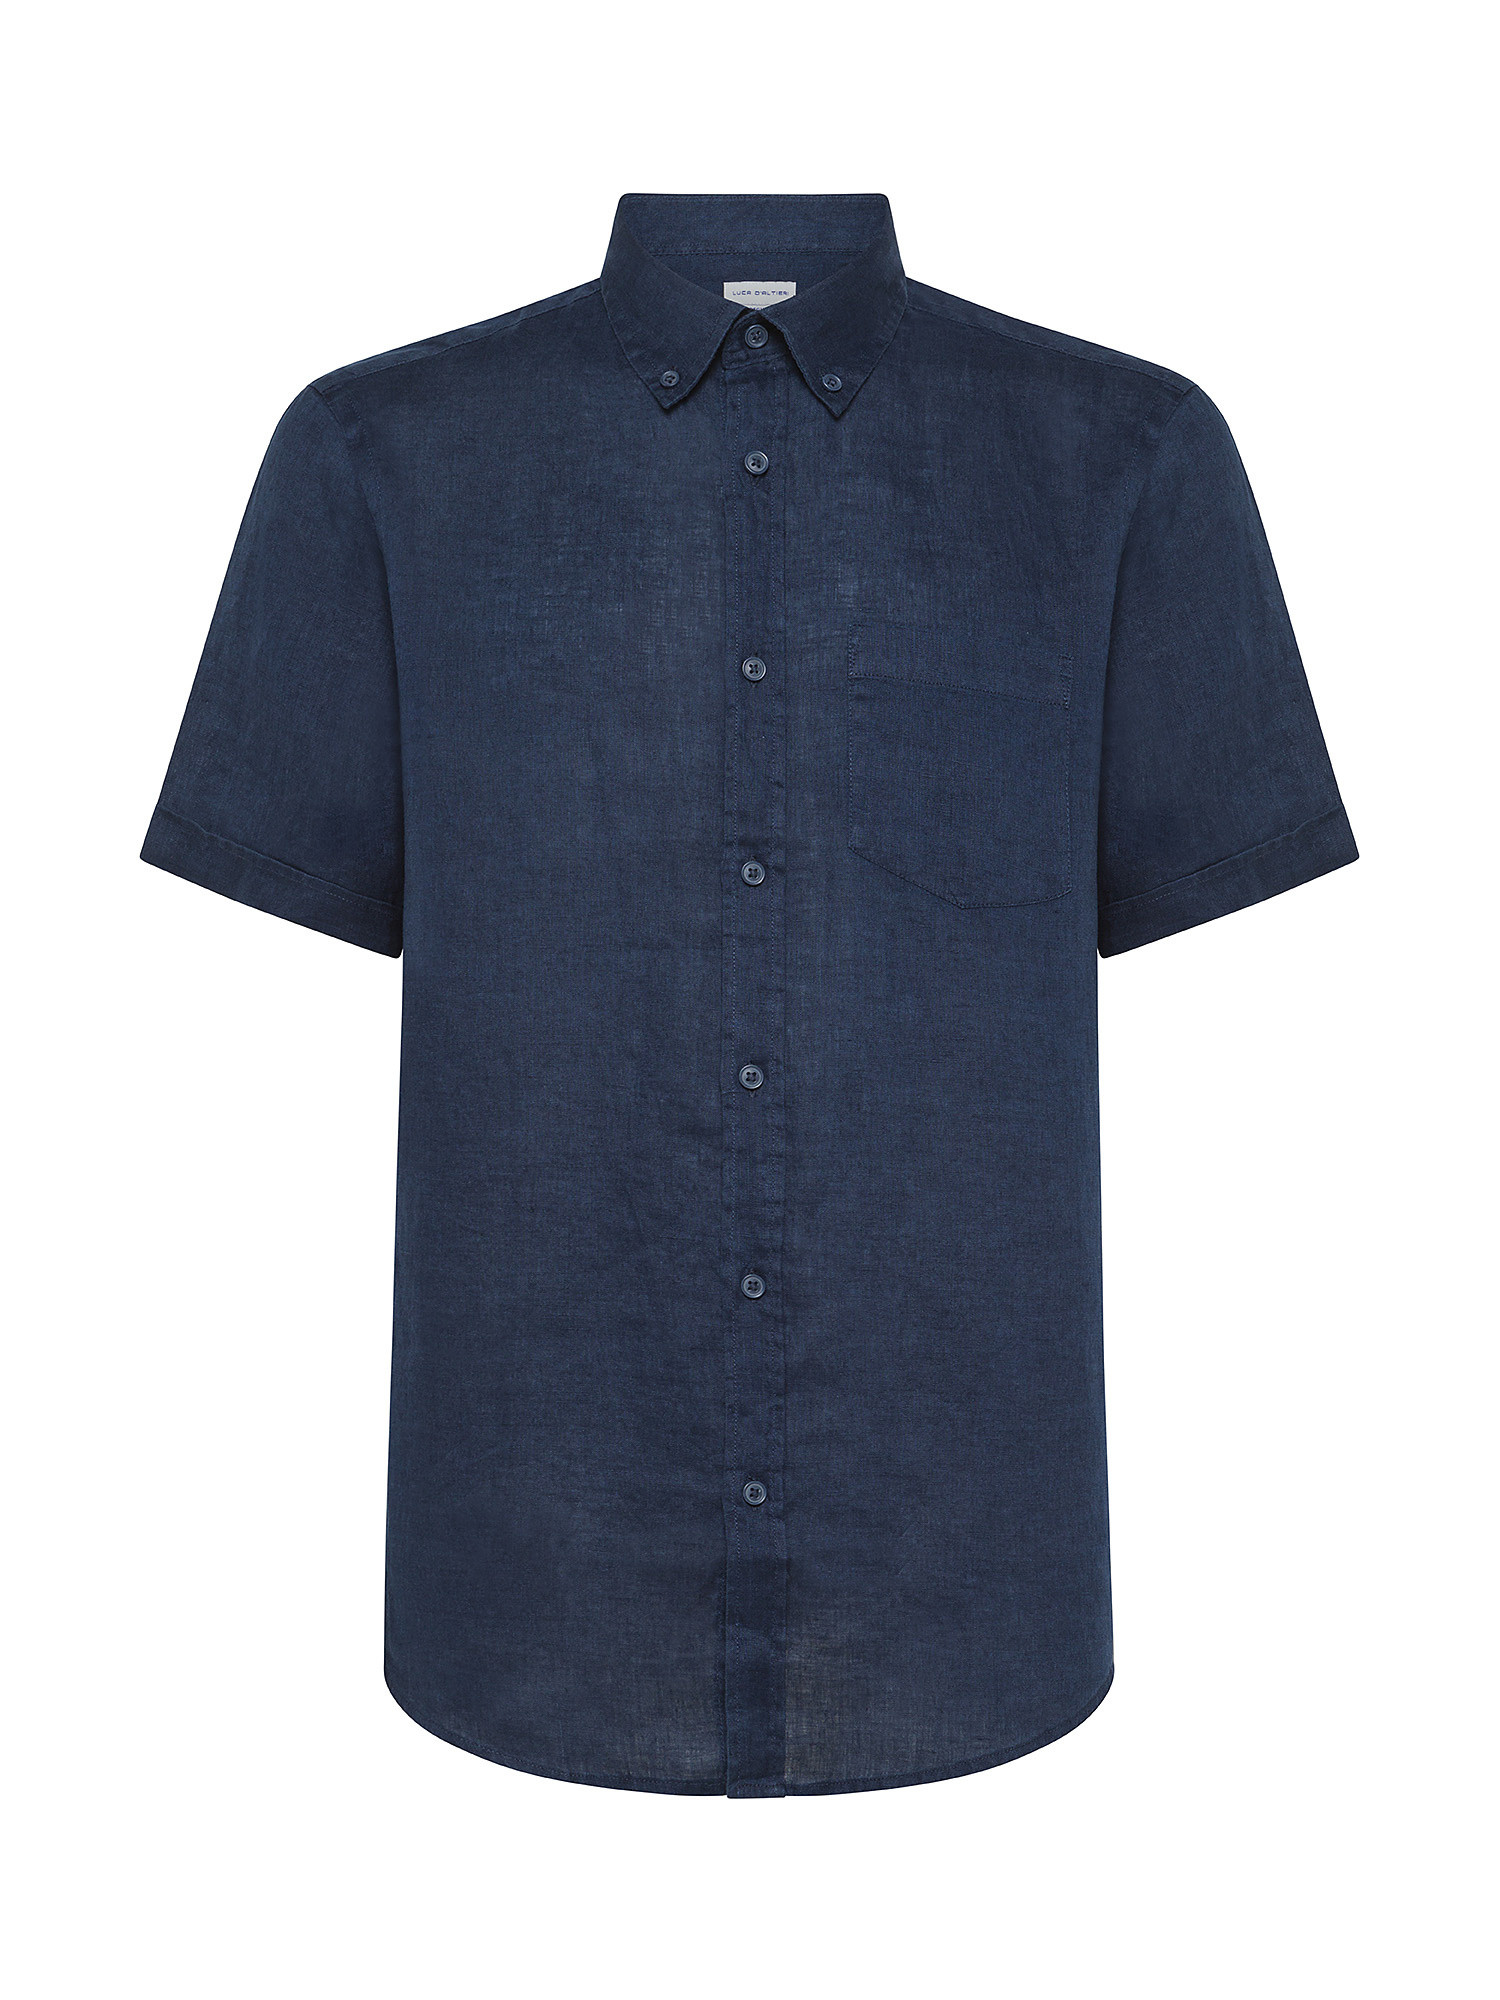 Luca D'Altieri - Regular fit shirt in pure linen, Blue, large image number 0